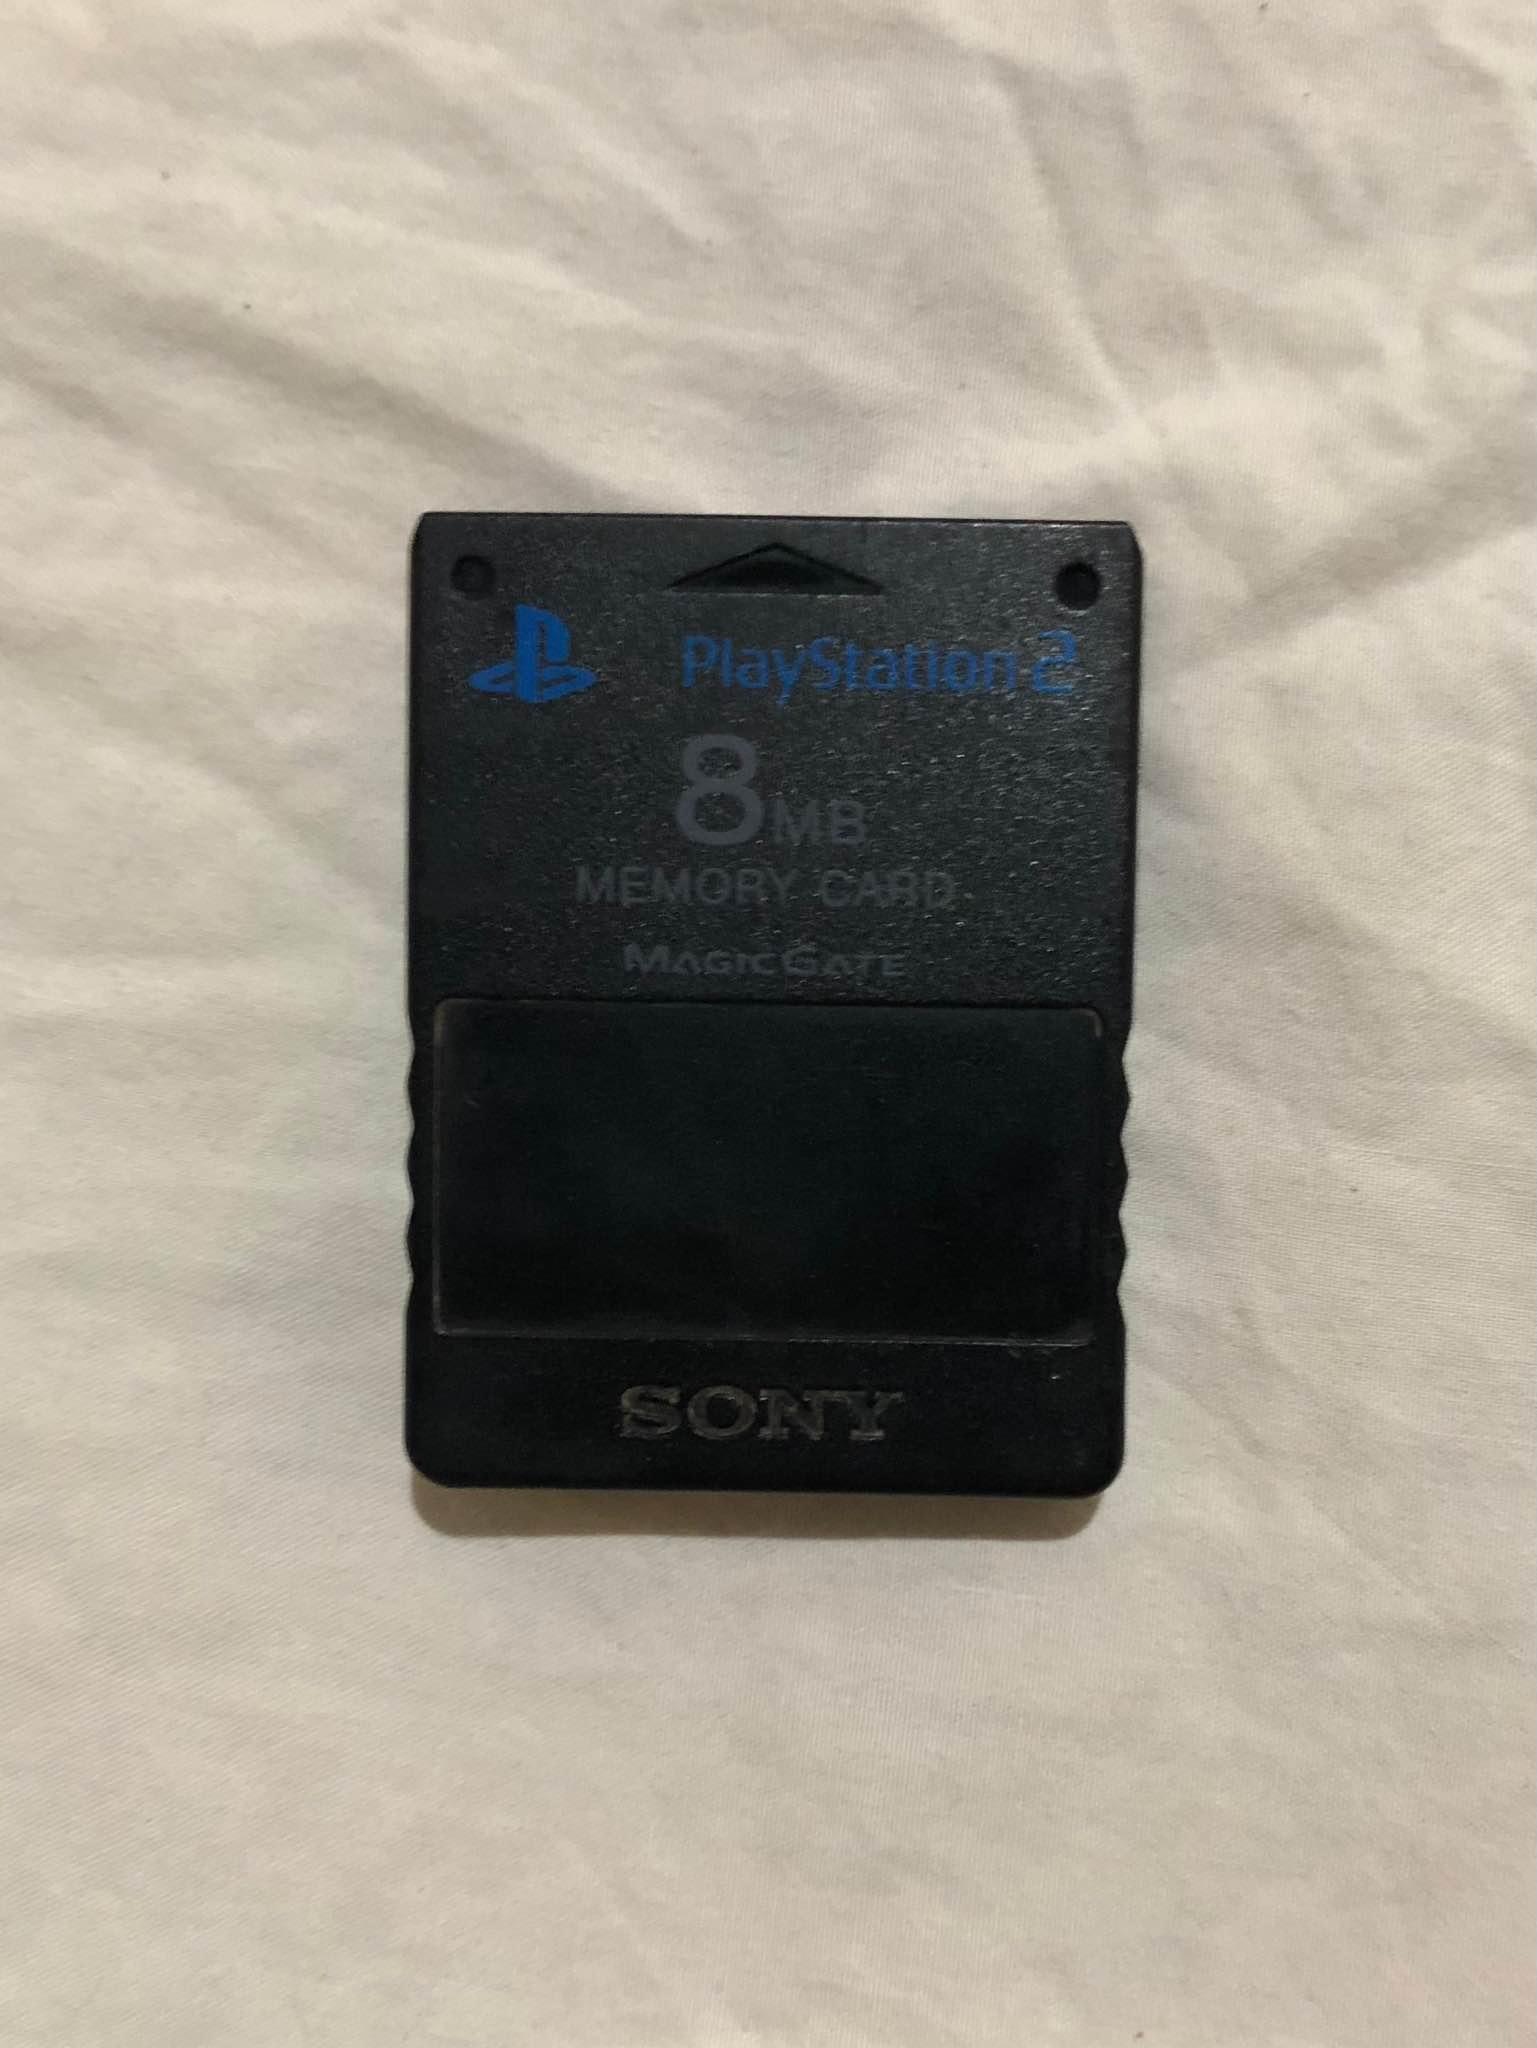 Memory card de 8MB para PlayStation 2